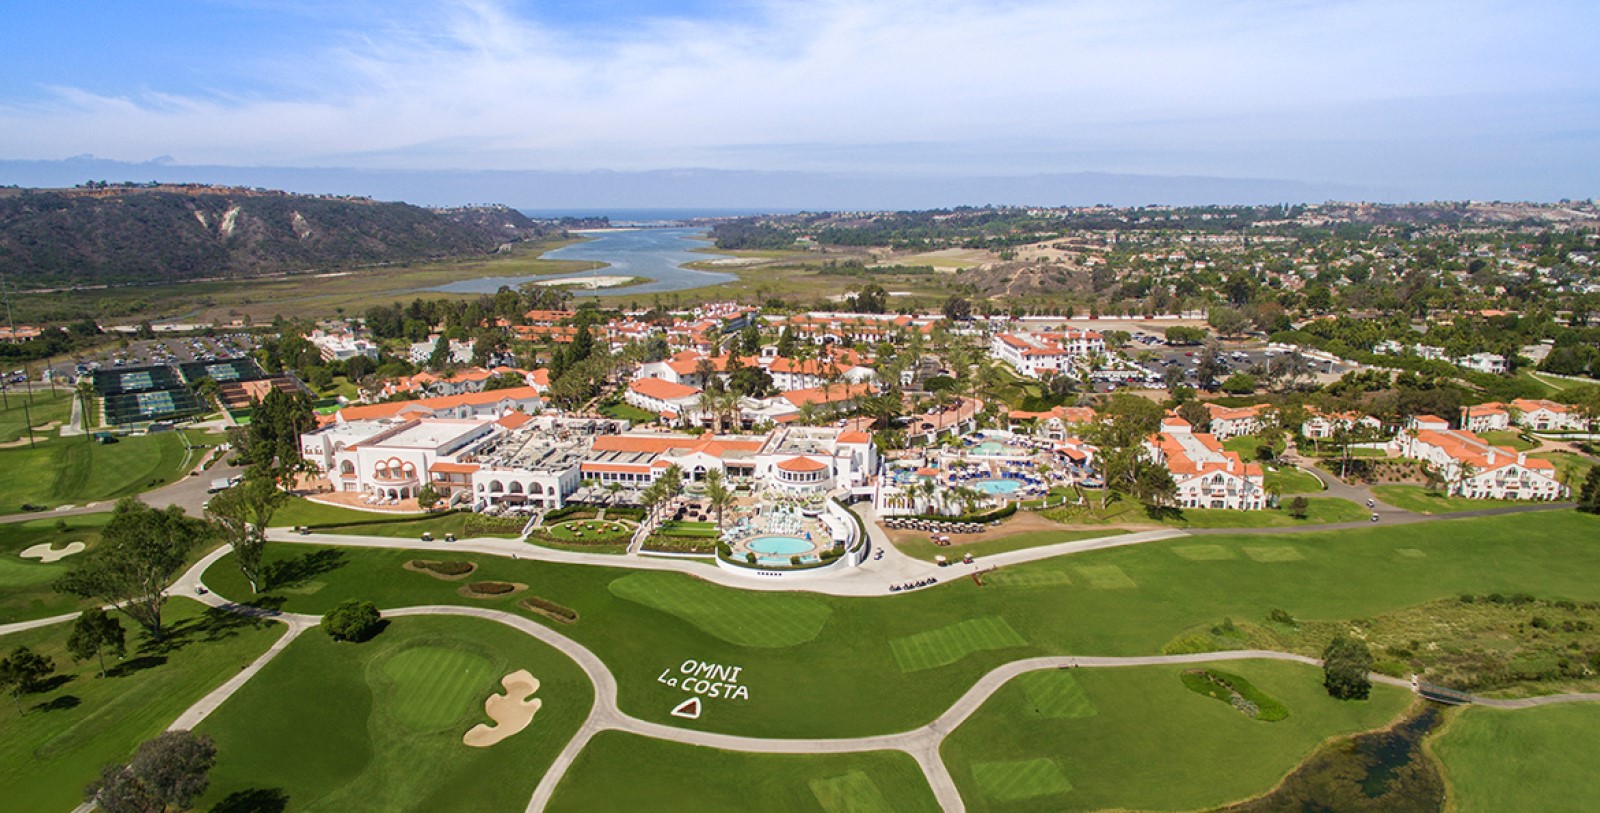 Image of Golf Links Aerial View, Omni La Costa Resort, 1965, Member of Historic Hotels of America, in Carlsbad, California.